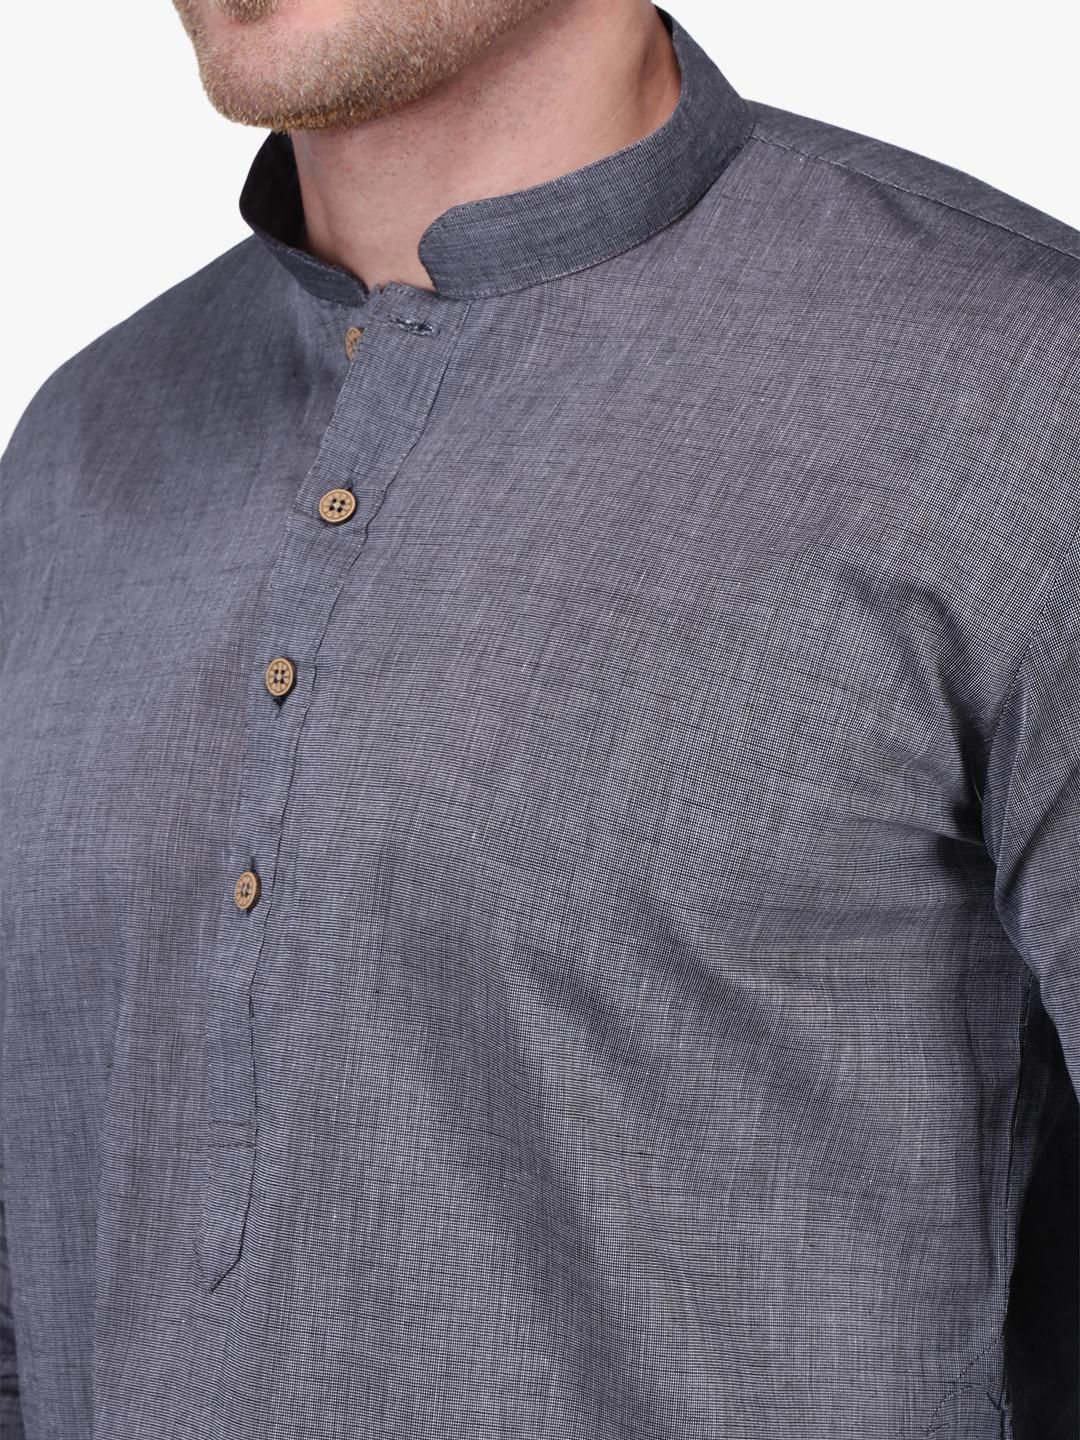 Iron Grey Slim Fit Handloom Cotton Kurta for Men Online Color Grey ...